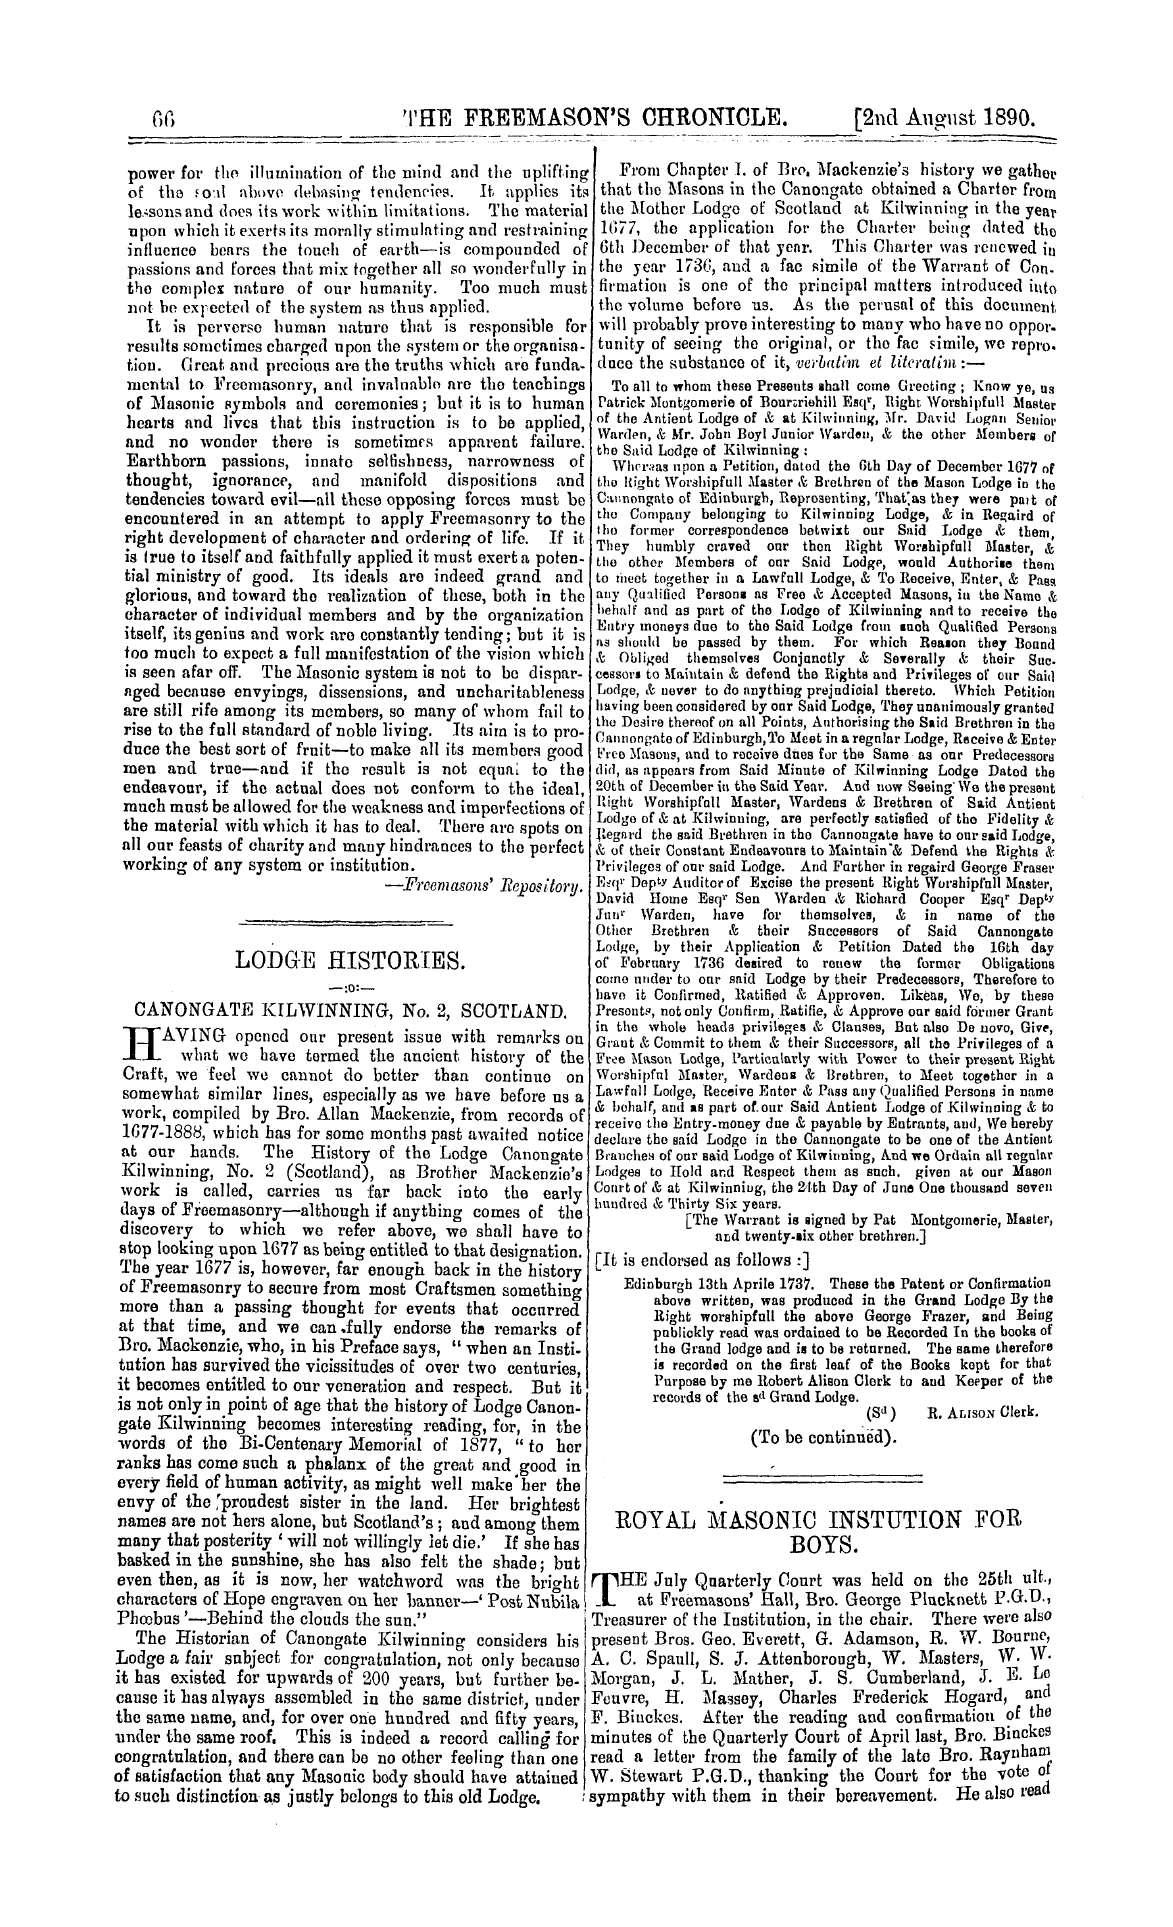 The Freemason's Chronicle: 1890-08-02: 2